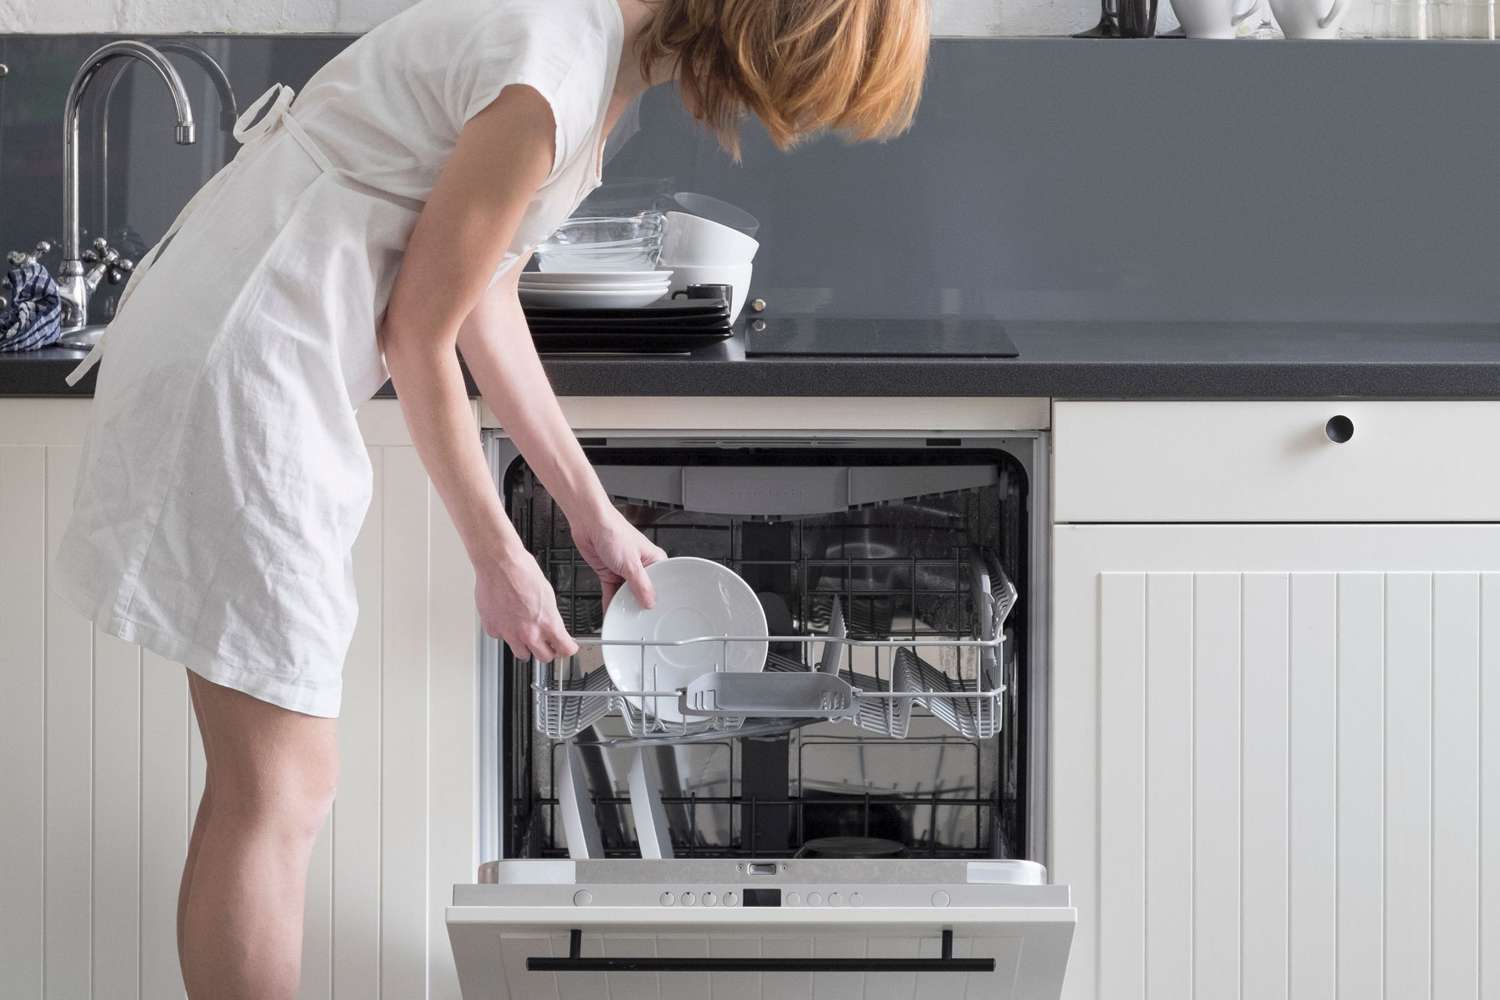 Woman loading the dishwasher